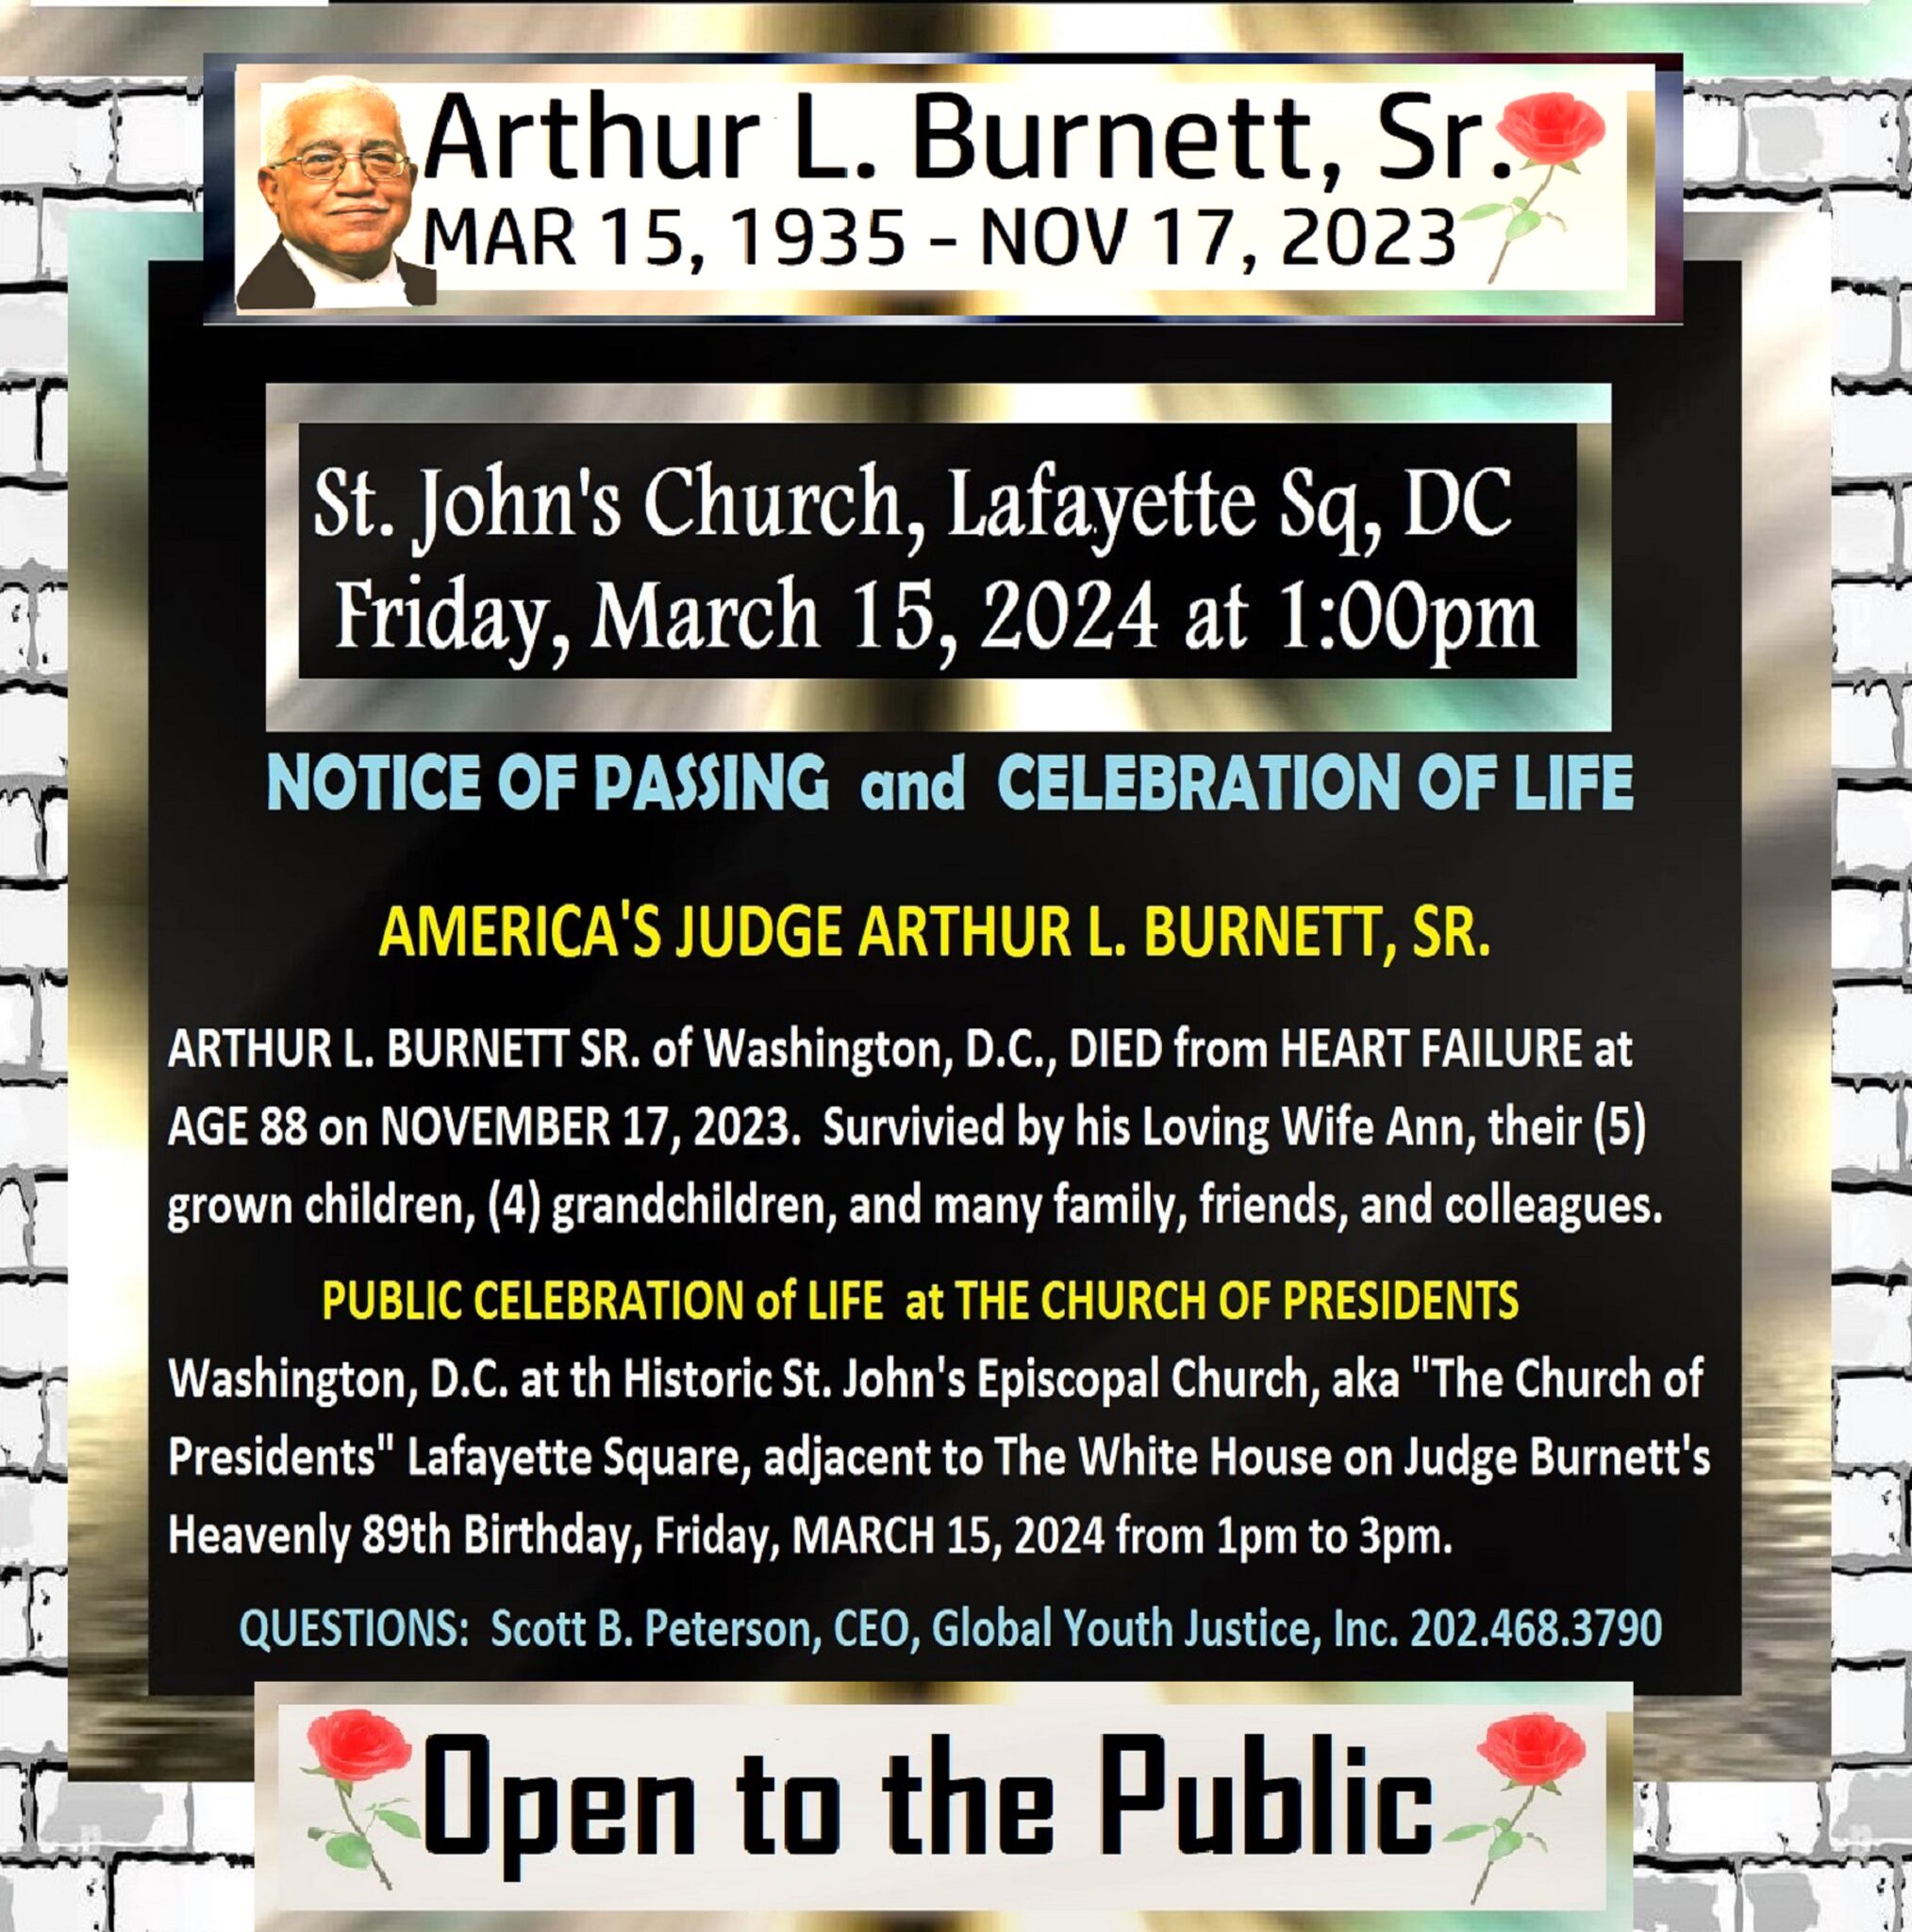 Judge Arthur L. Burnett, Sr. Official Celebration of Life on March 15, 2024